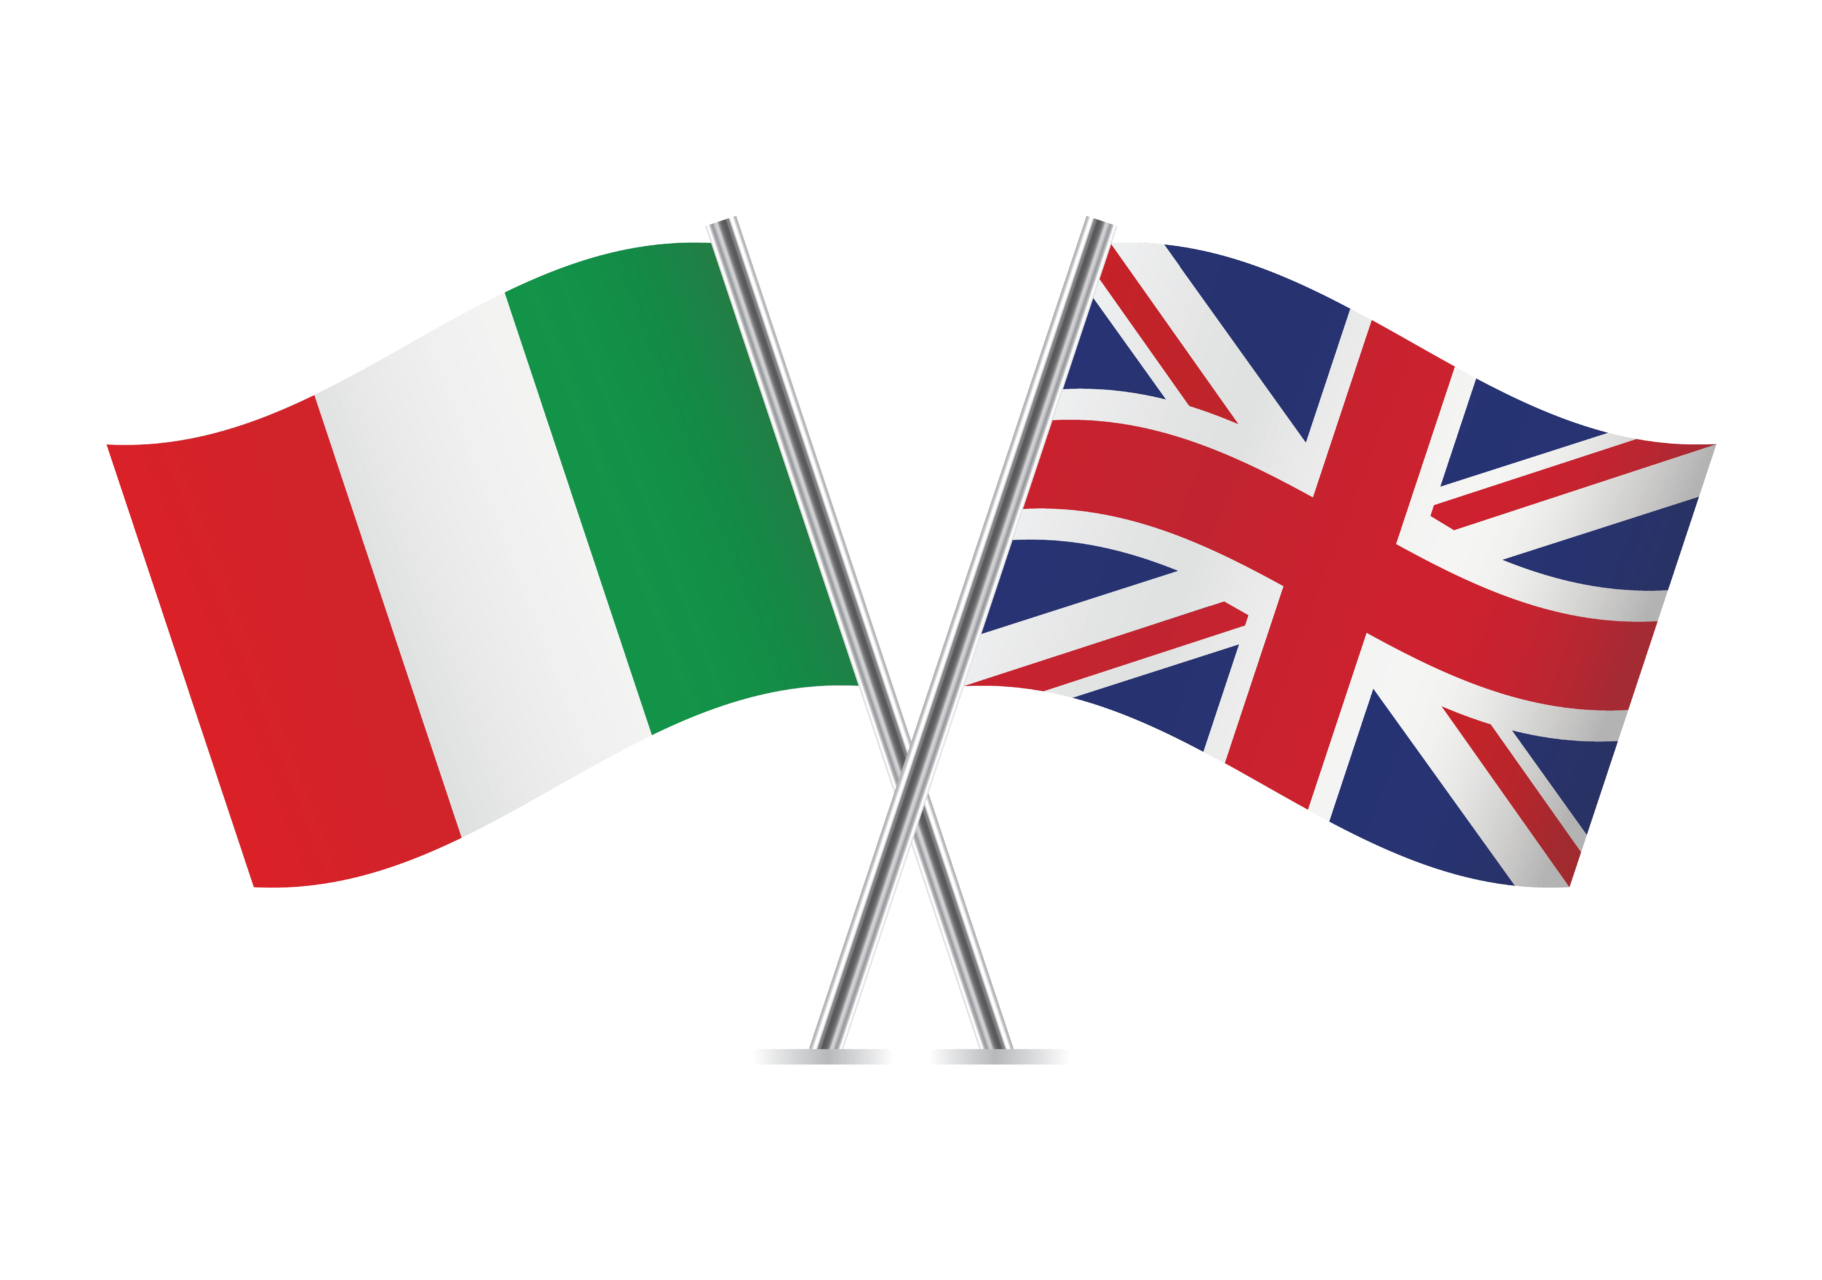 Bandiera italiana e bandiera inglese